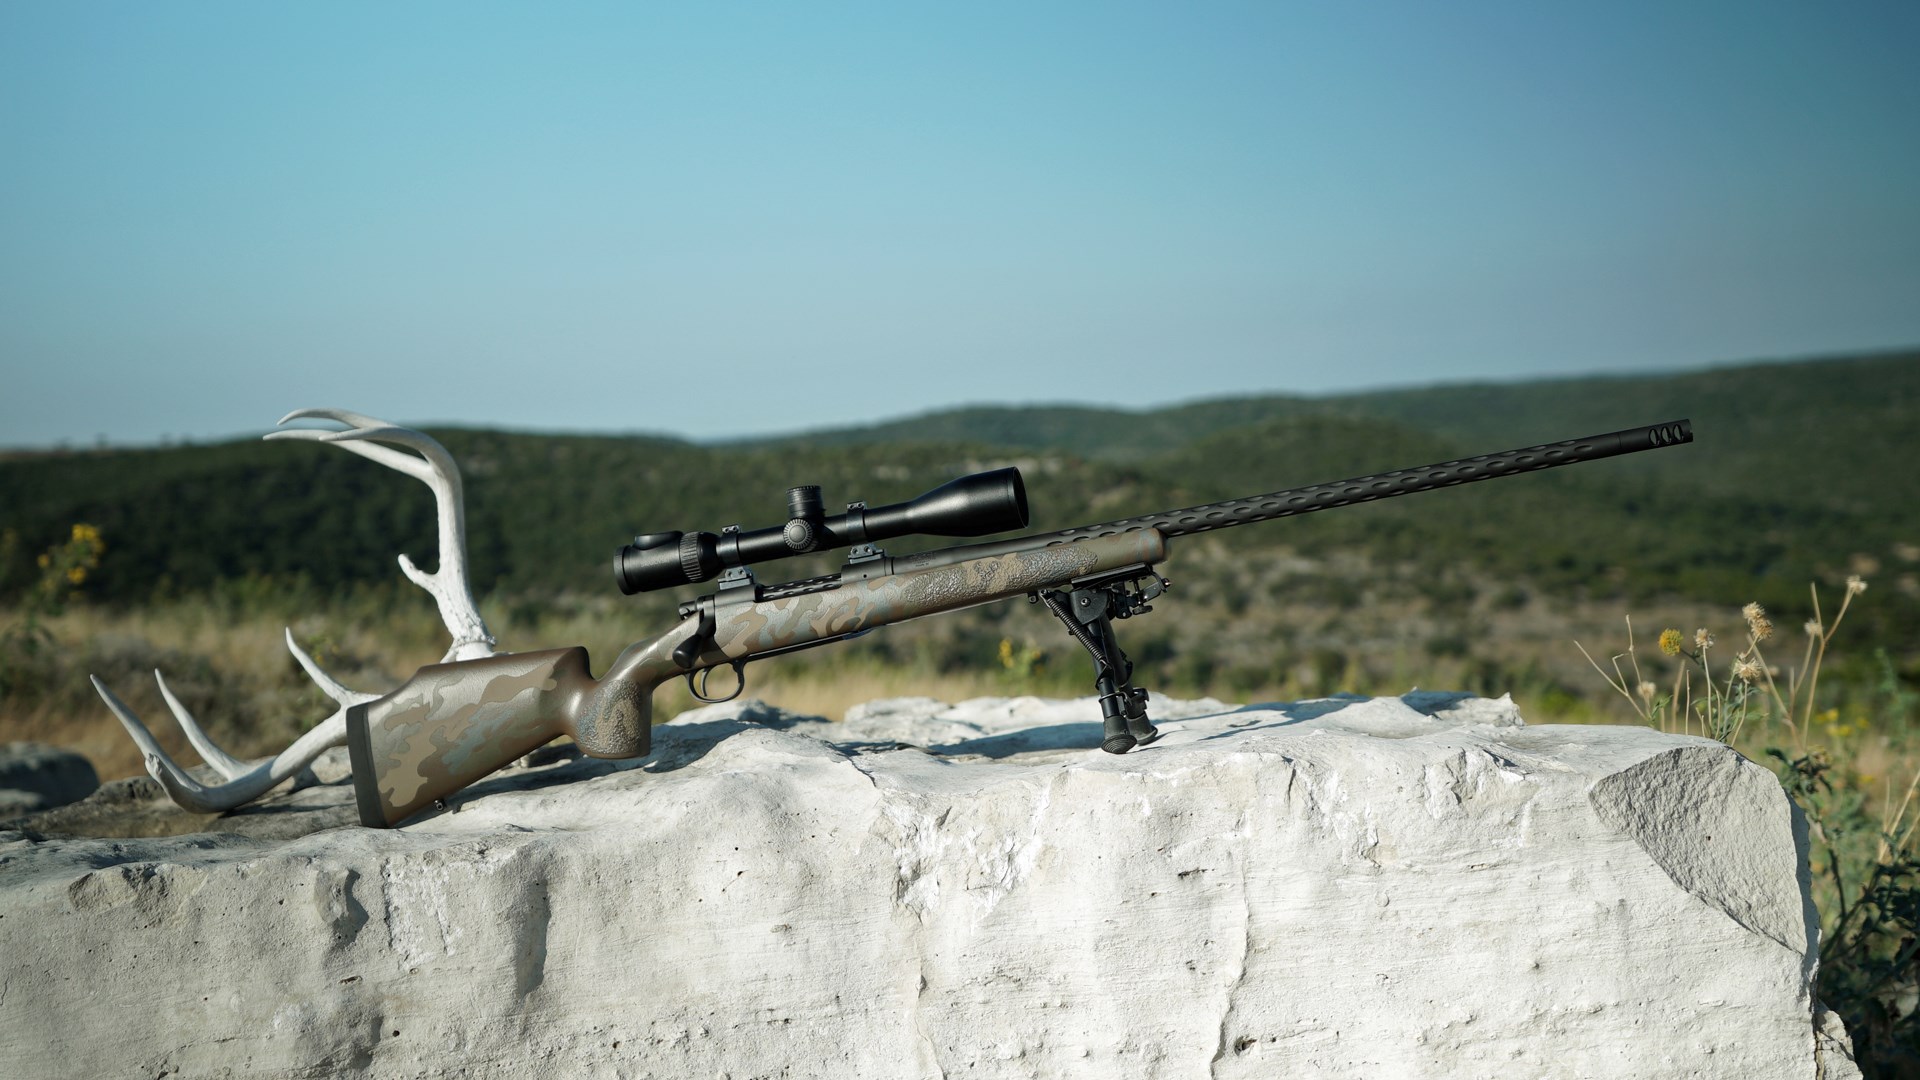 Bolt-action remington m700 custom rifle on rock boulder shown outdoors full sun antlers skull deer background hills ftw ranch